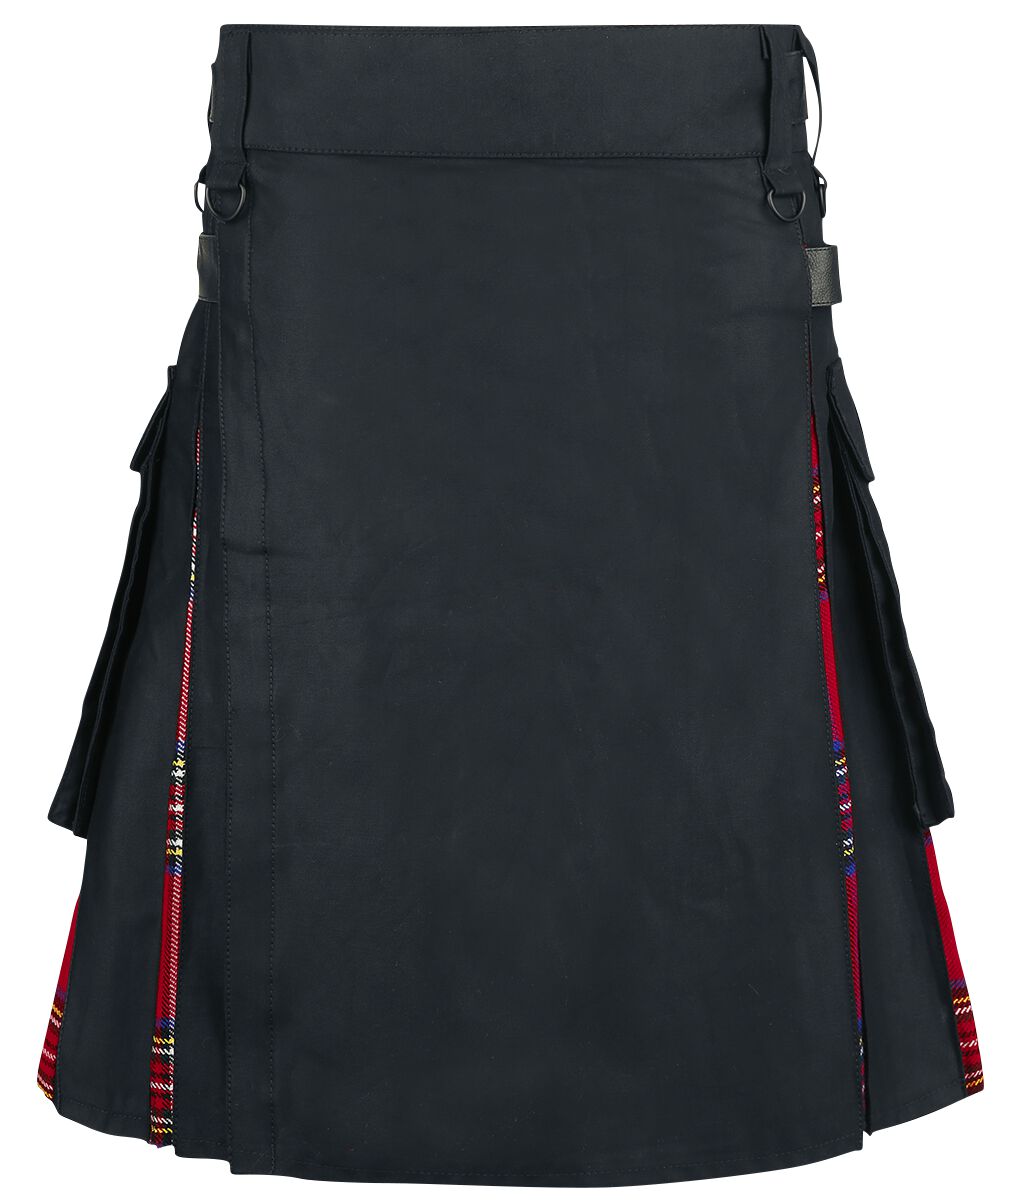 Altana Industries Black Tartan Kilt Medium-length skirt black